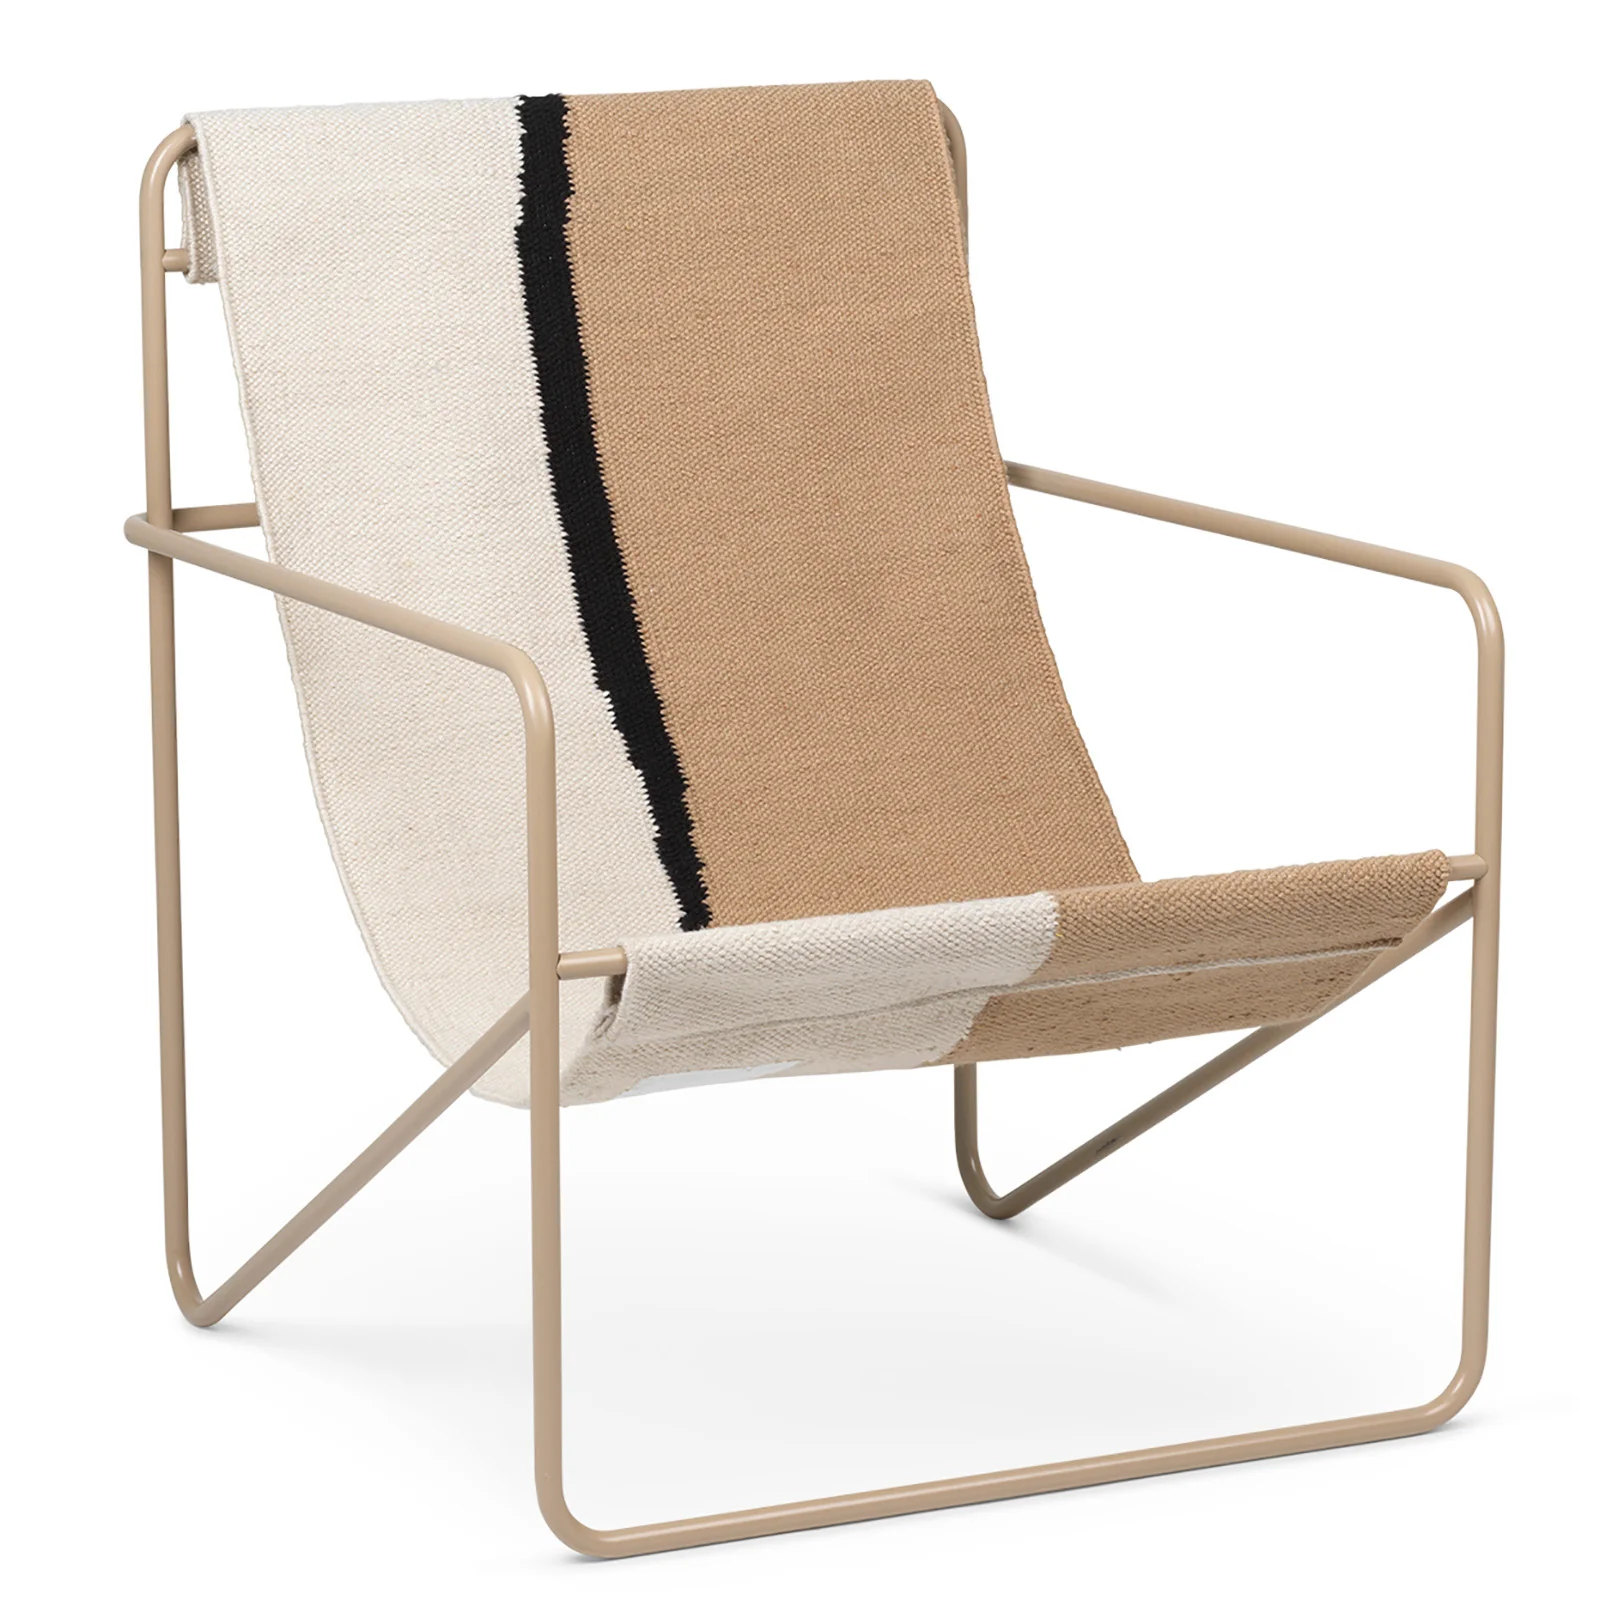 Ferm Living Desert Lounge Chair - Cashmere/Soil Image 1